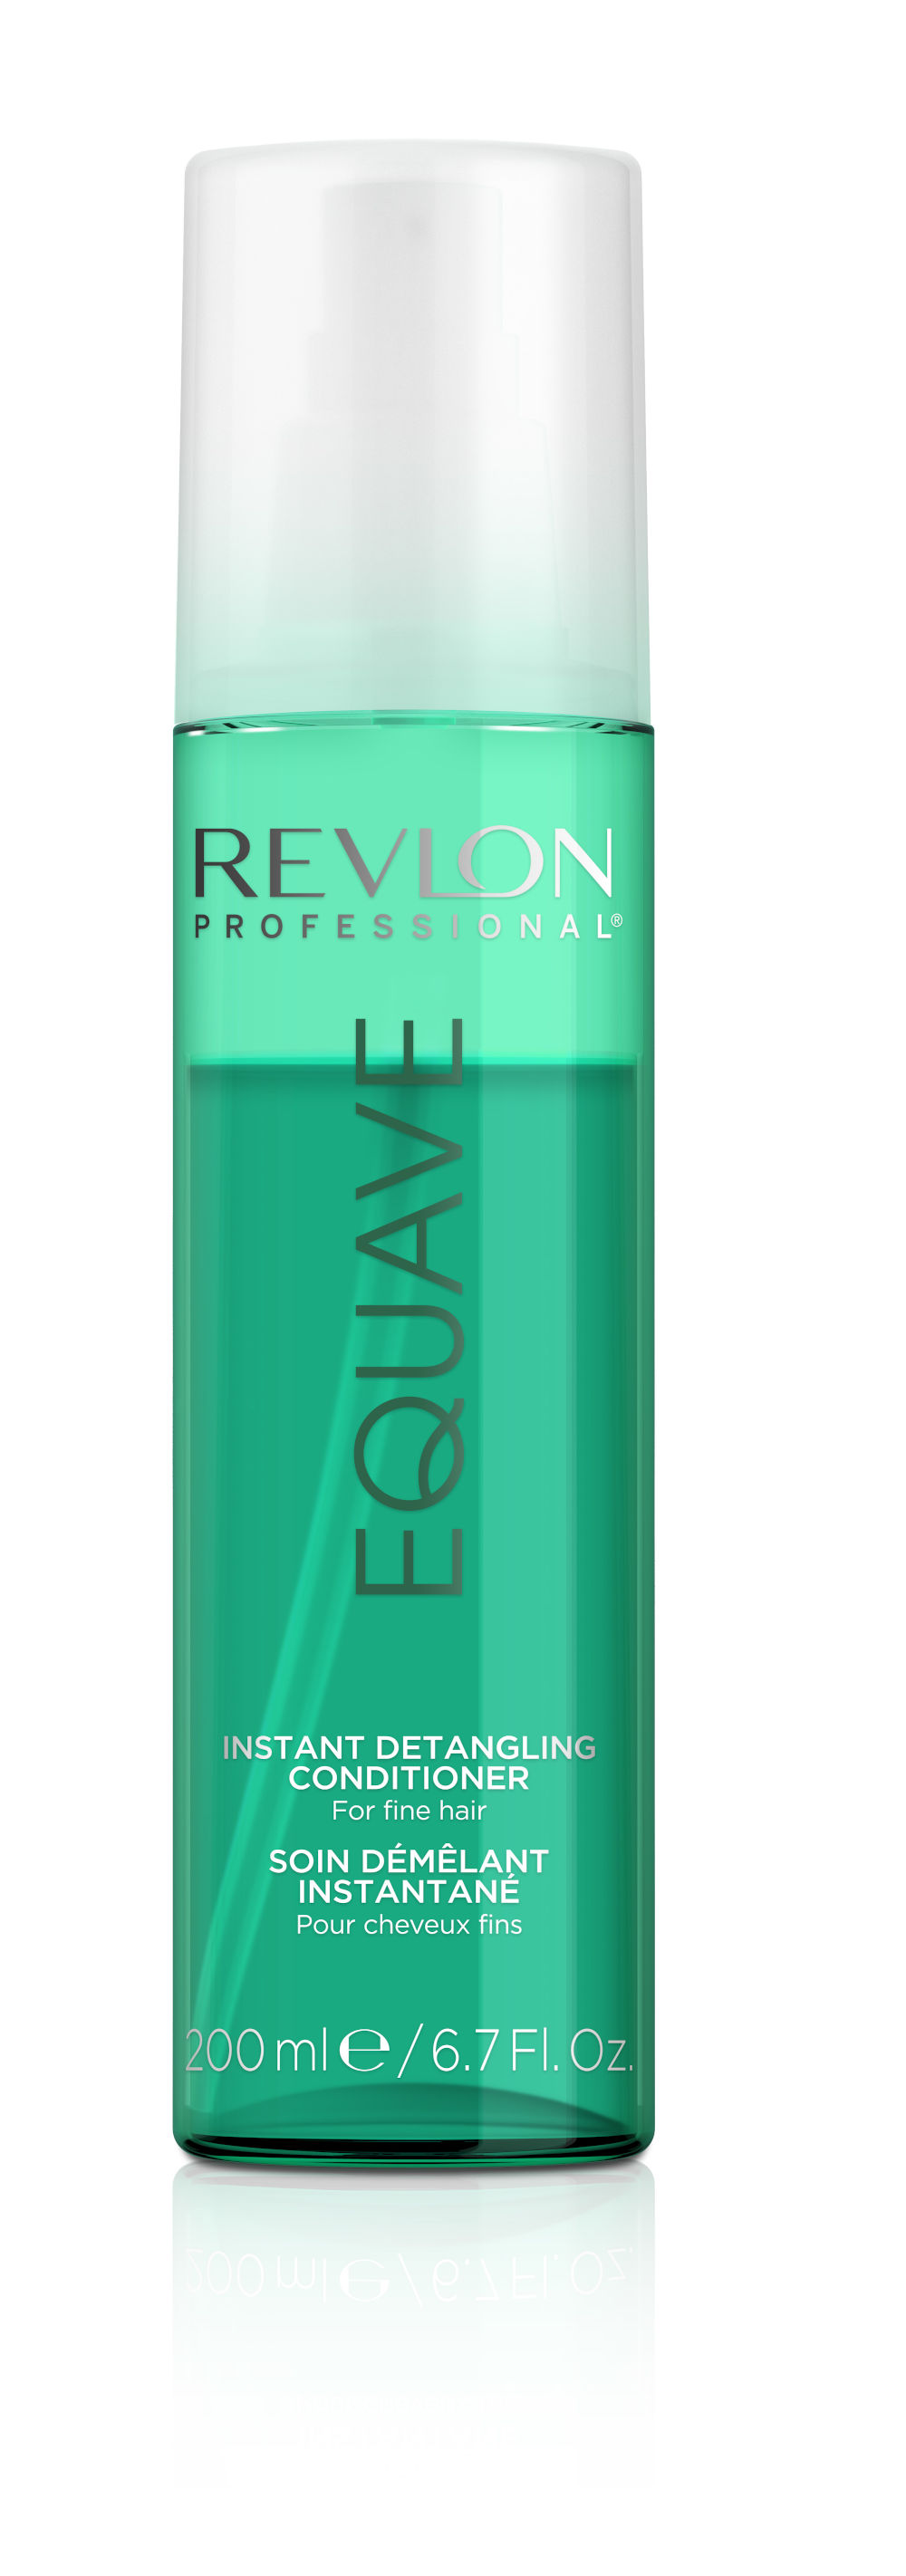 Online Volume Conditoner Detangling Klier Shop | Equave Revlon Hair